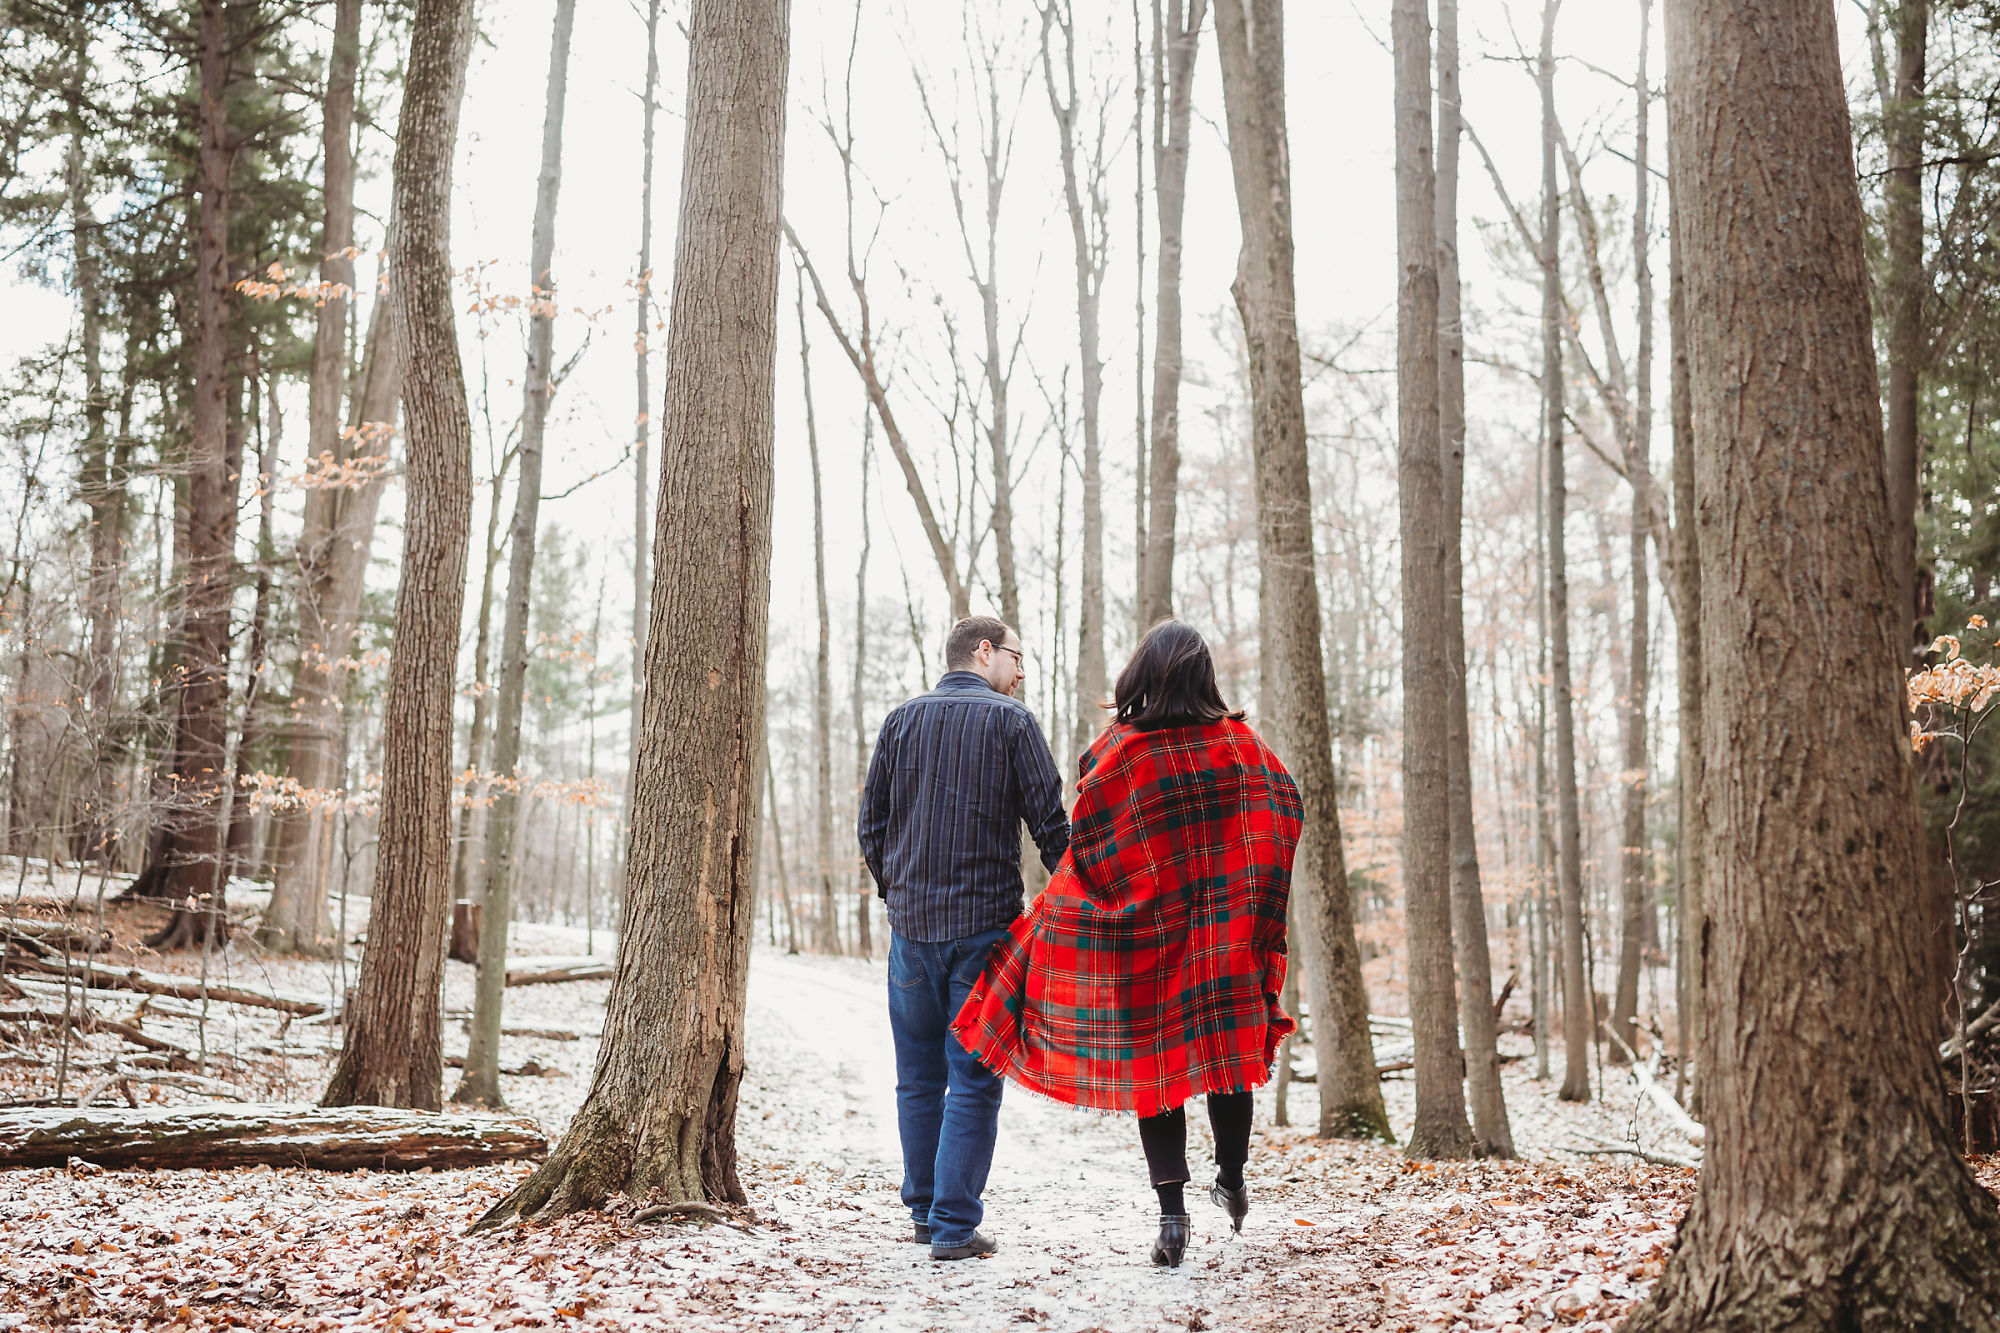 Andy & Erin walk through Dundas Conservation Area in Hamilton Ontario during their winter maternity photoshoot with Jennifer Blaak Photography.